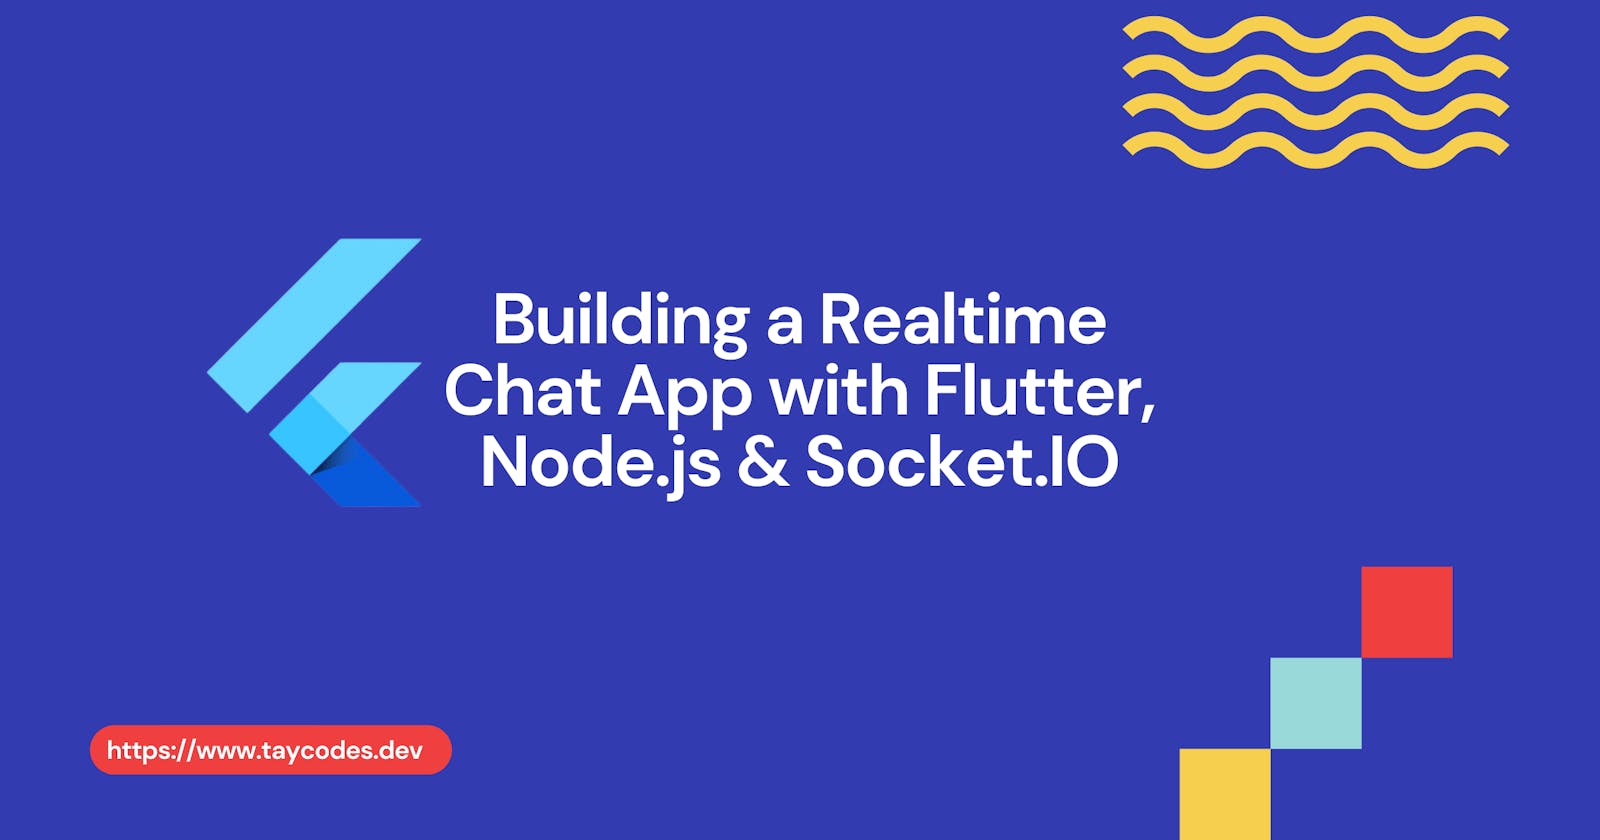 Building a Realtime Chat App with Flutter, Node.js & Socket.IO